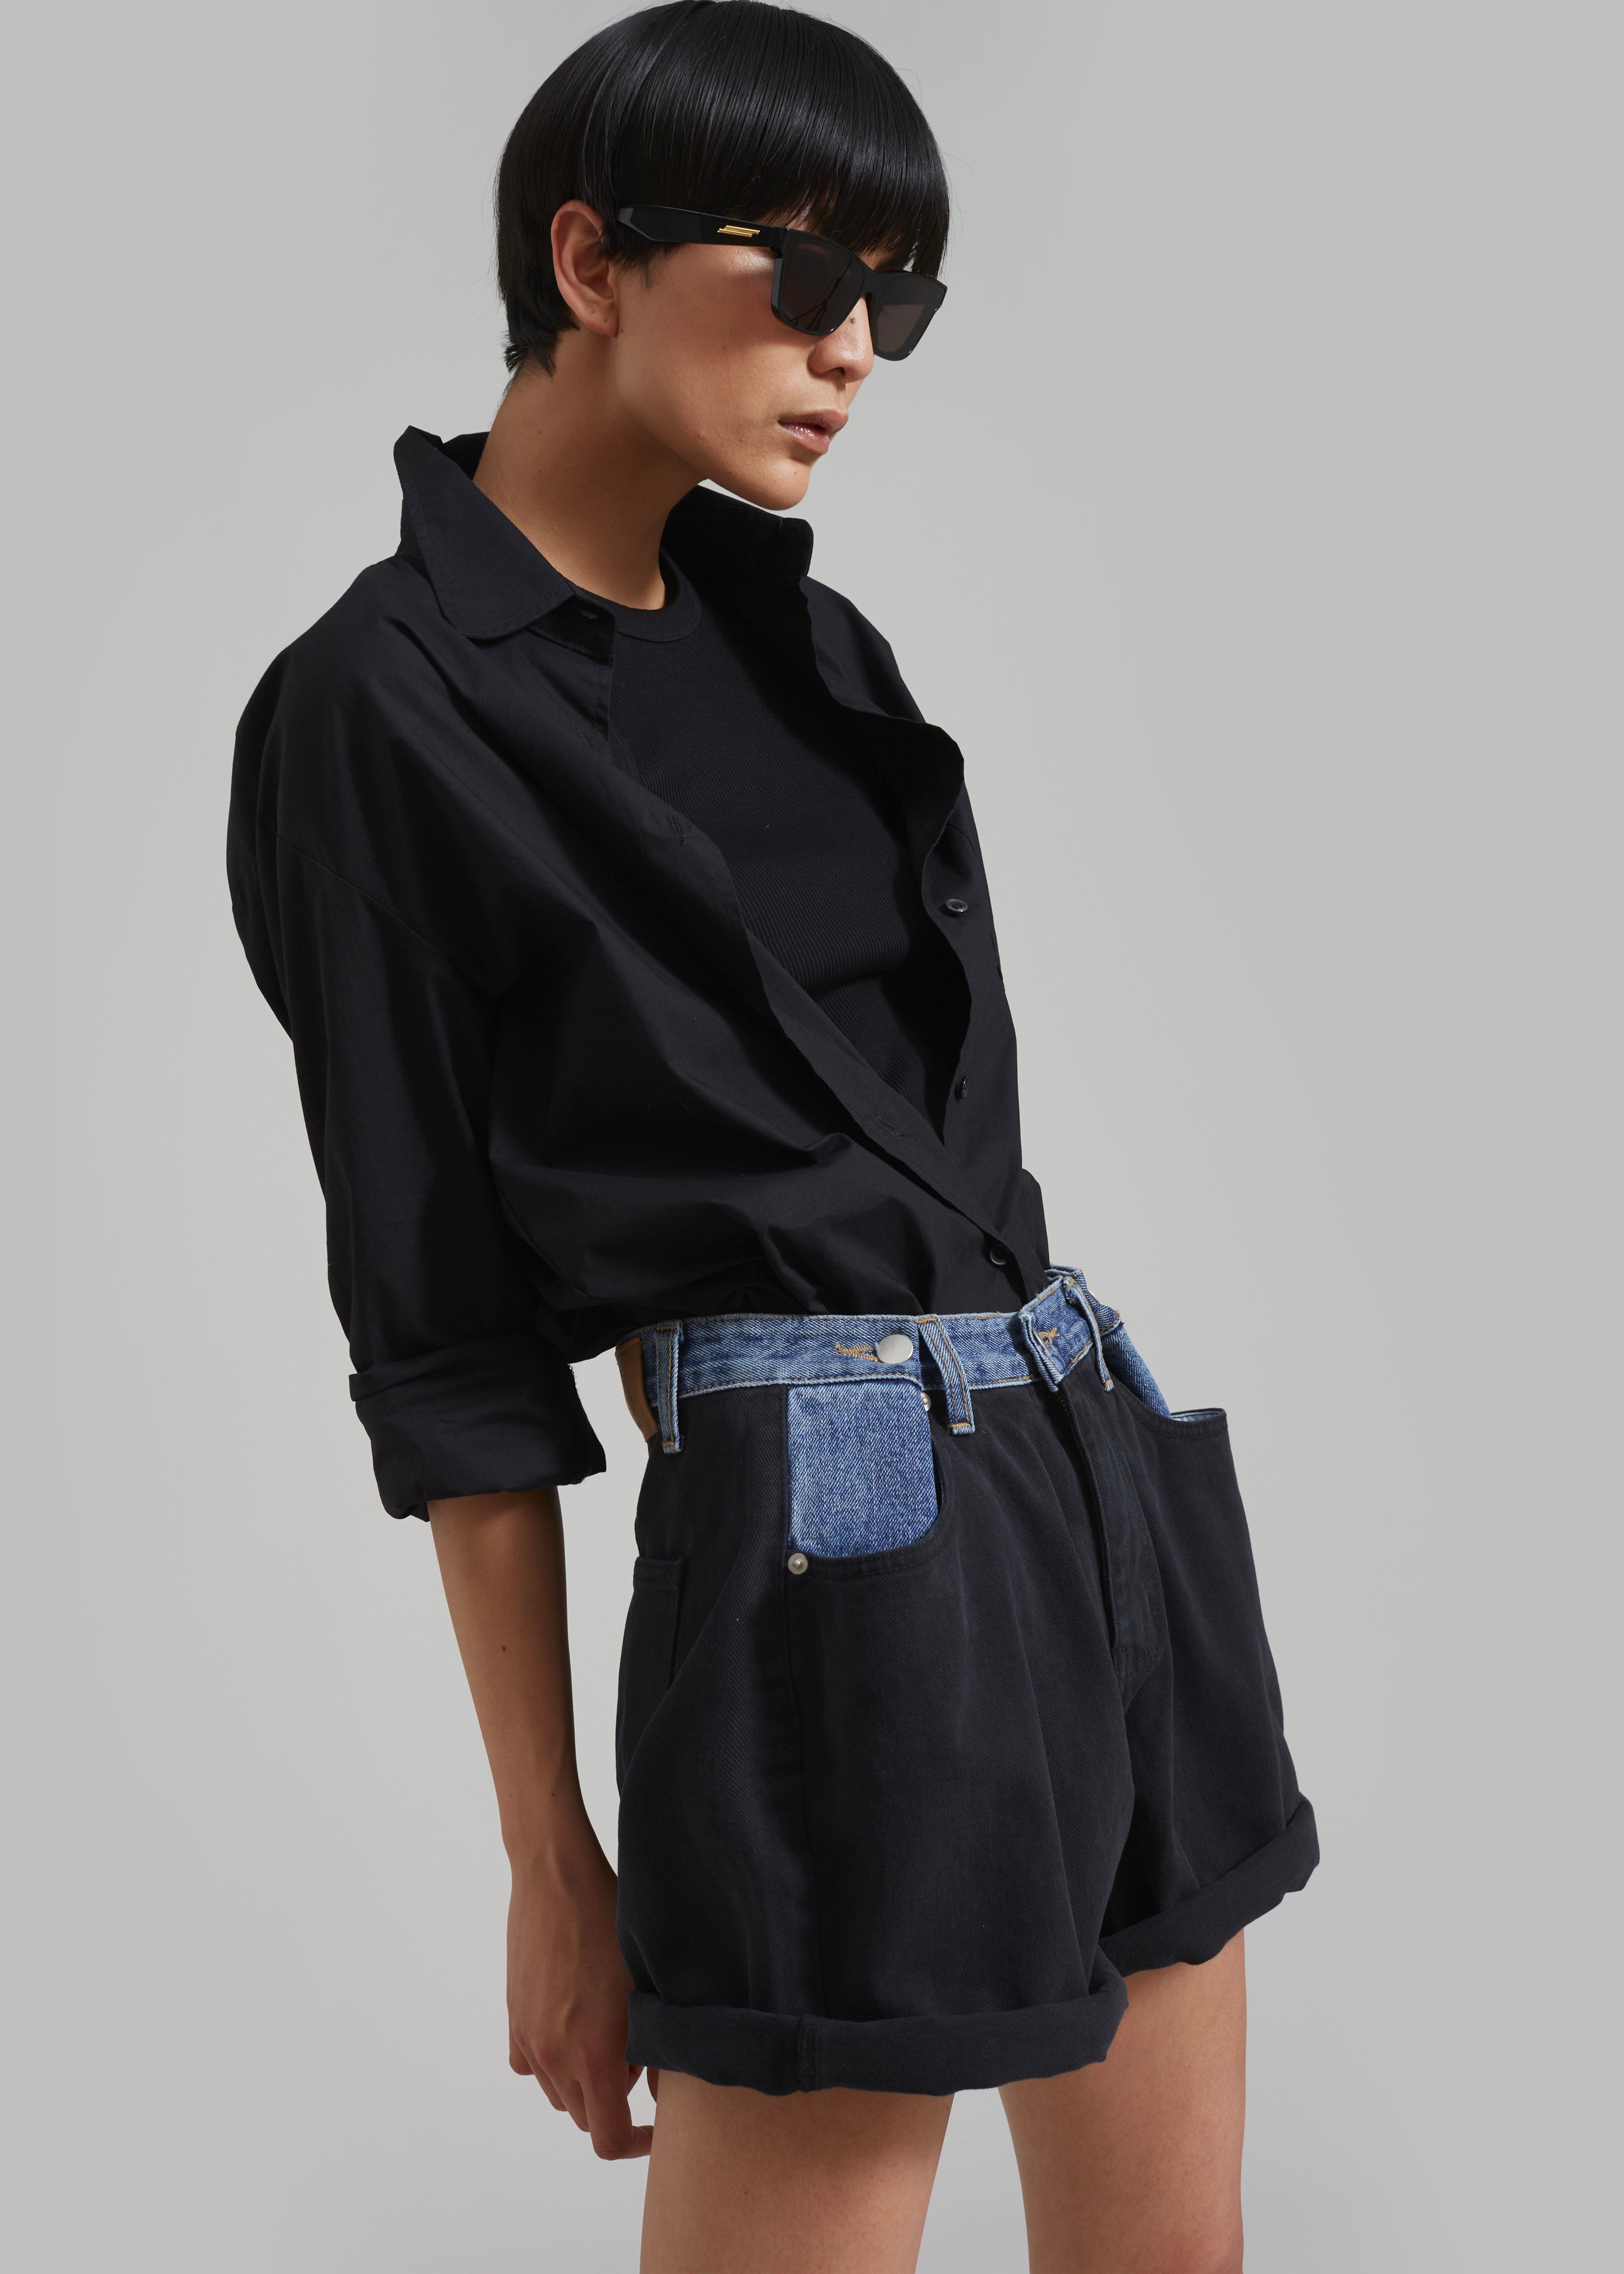 Hayla Contrast Denim Shorts - Black/Blue - 2